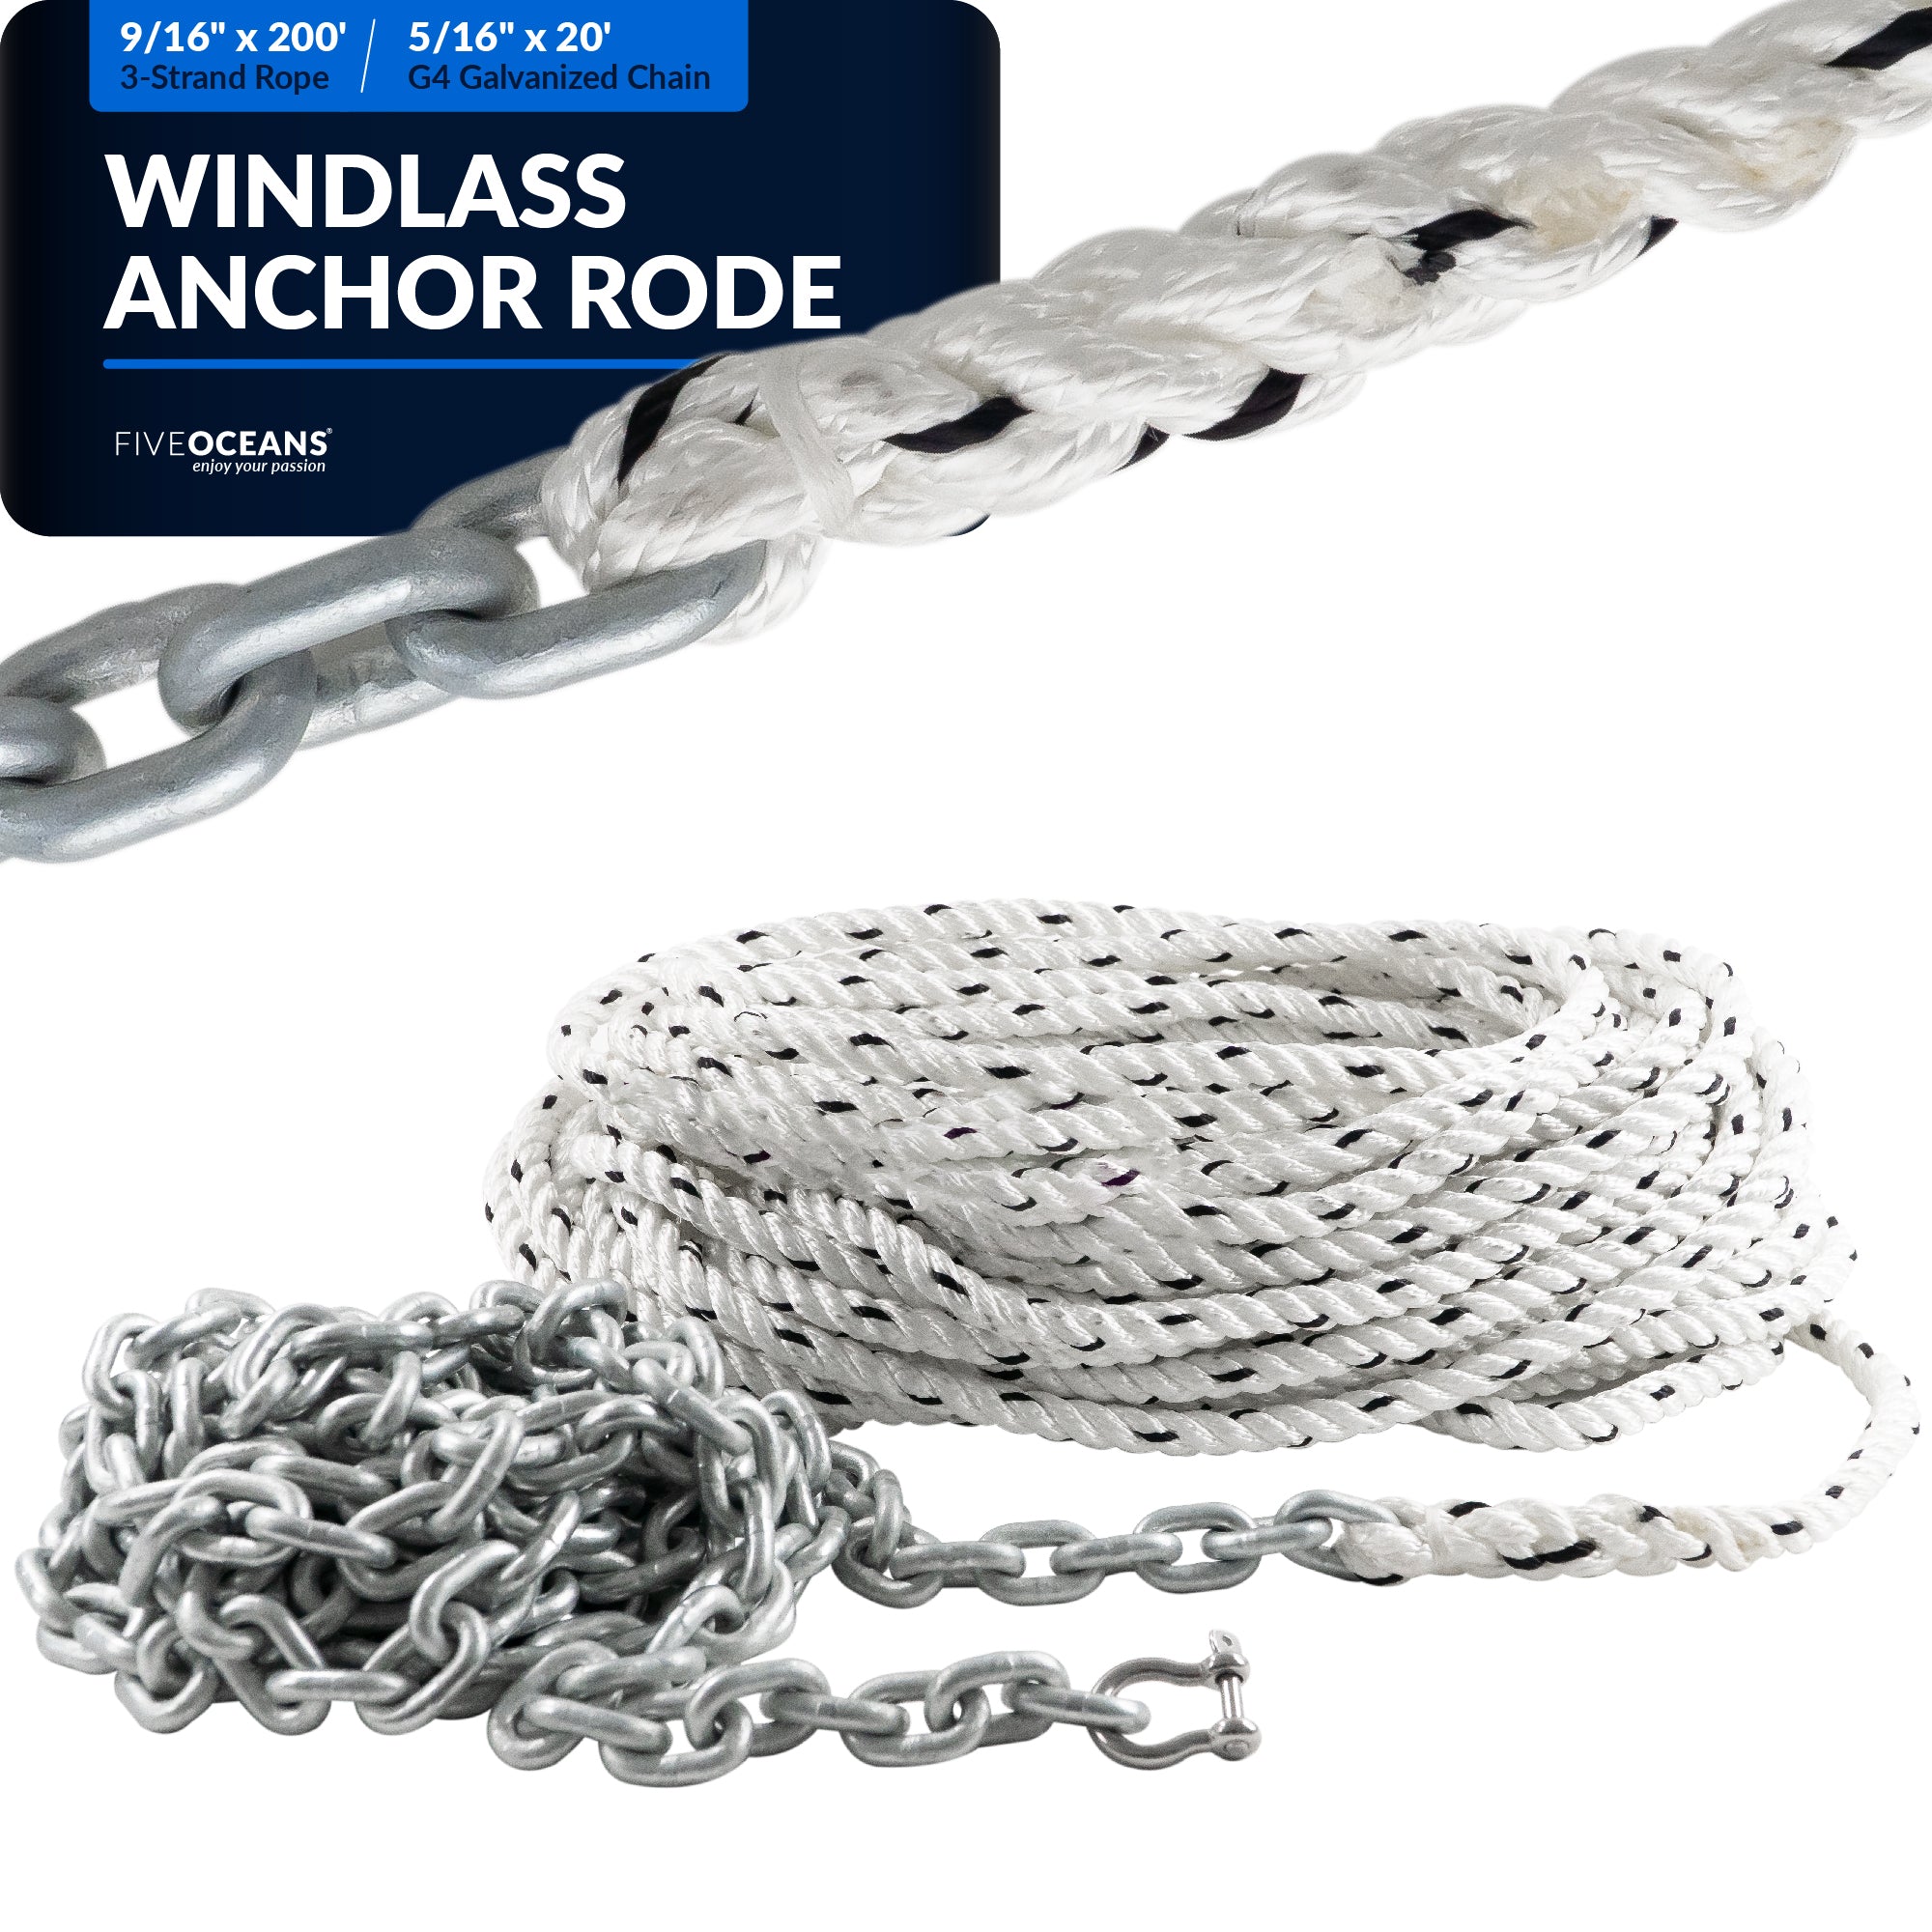 Windlass Anchor Rode, 9/16" x 200' Nylon 3-Strand Rope, 5/16" x 20' G4 Hot-Dipped Galvanized Steel Chain - FO4524